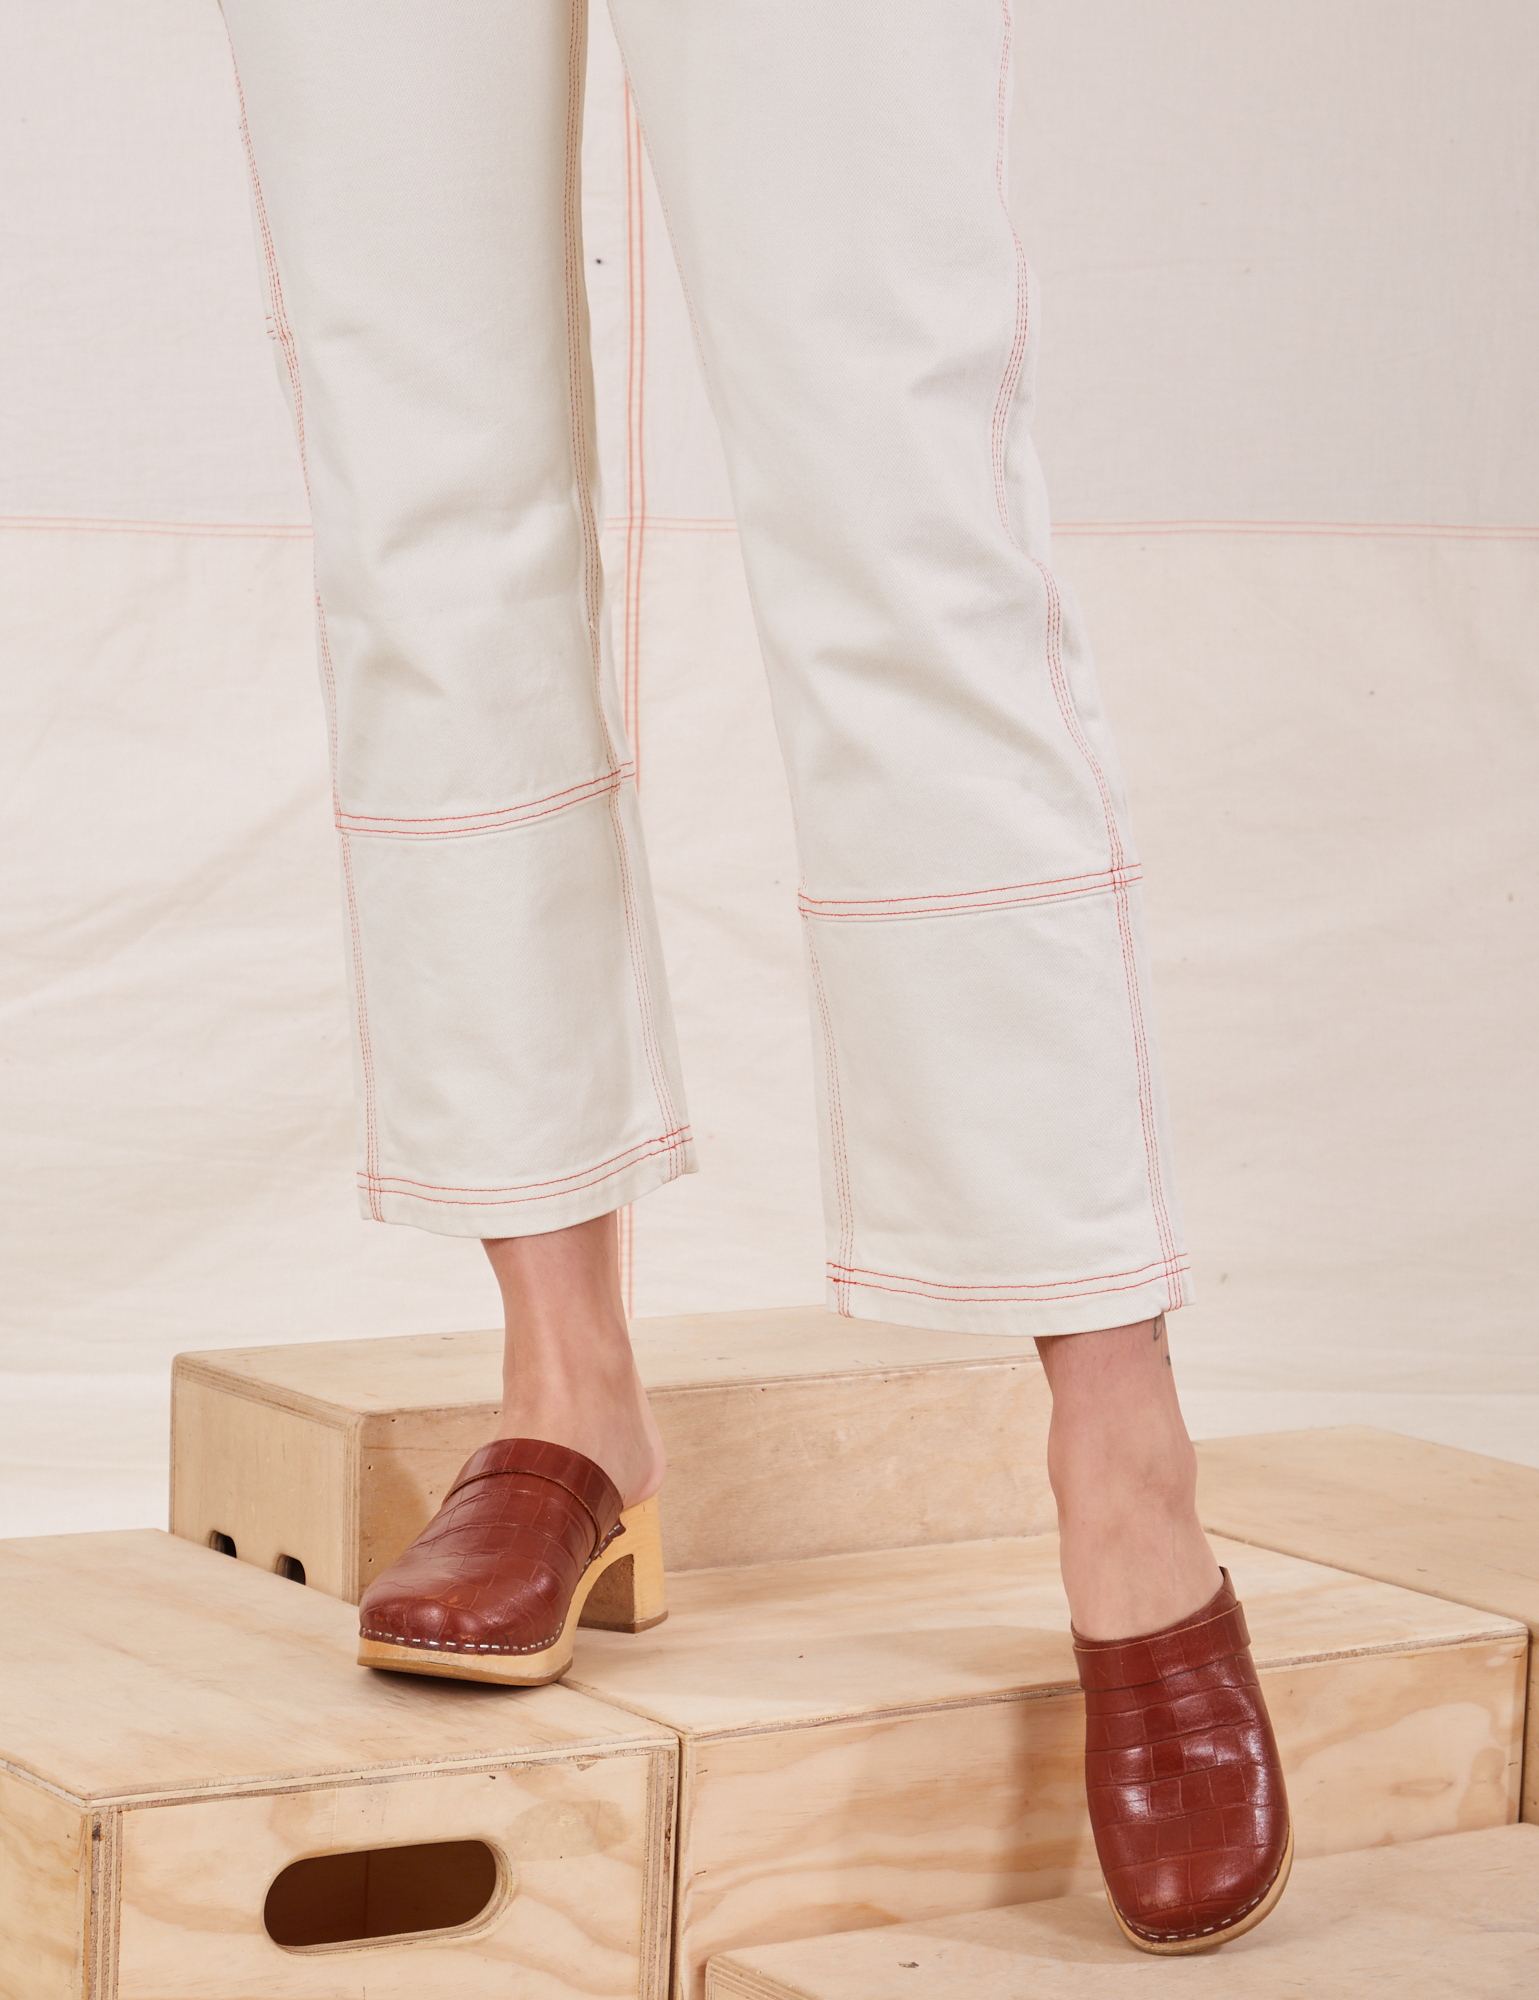 Carpenter Jeans in Vintage Off-White pant leg close up on Alex